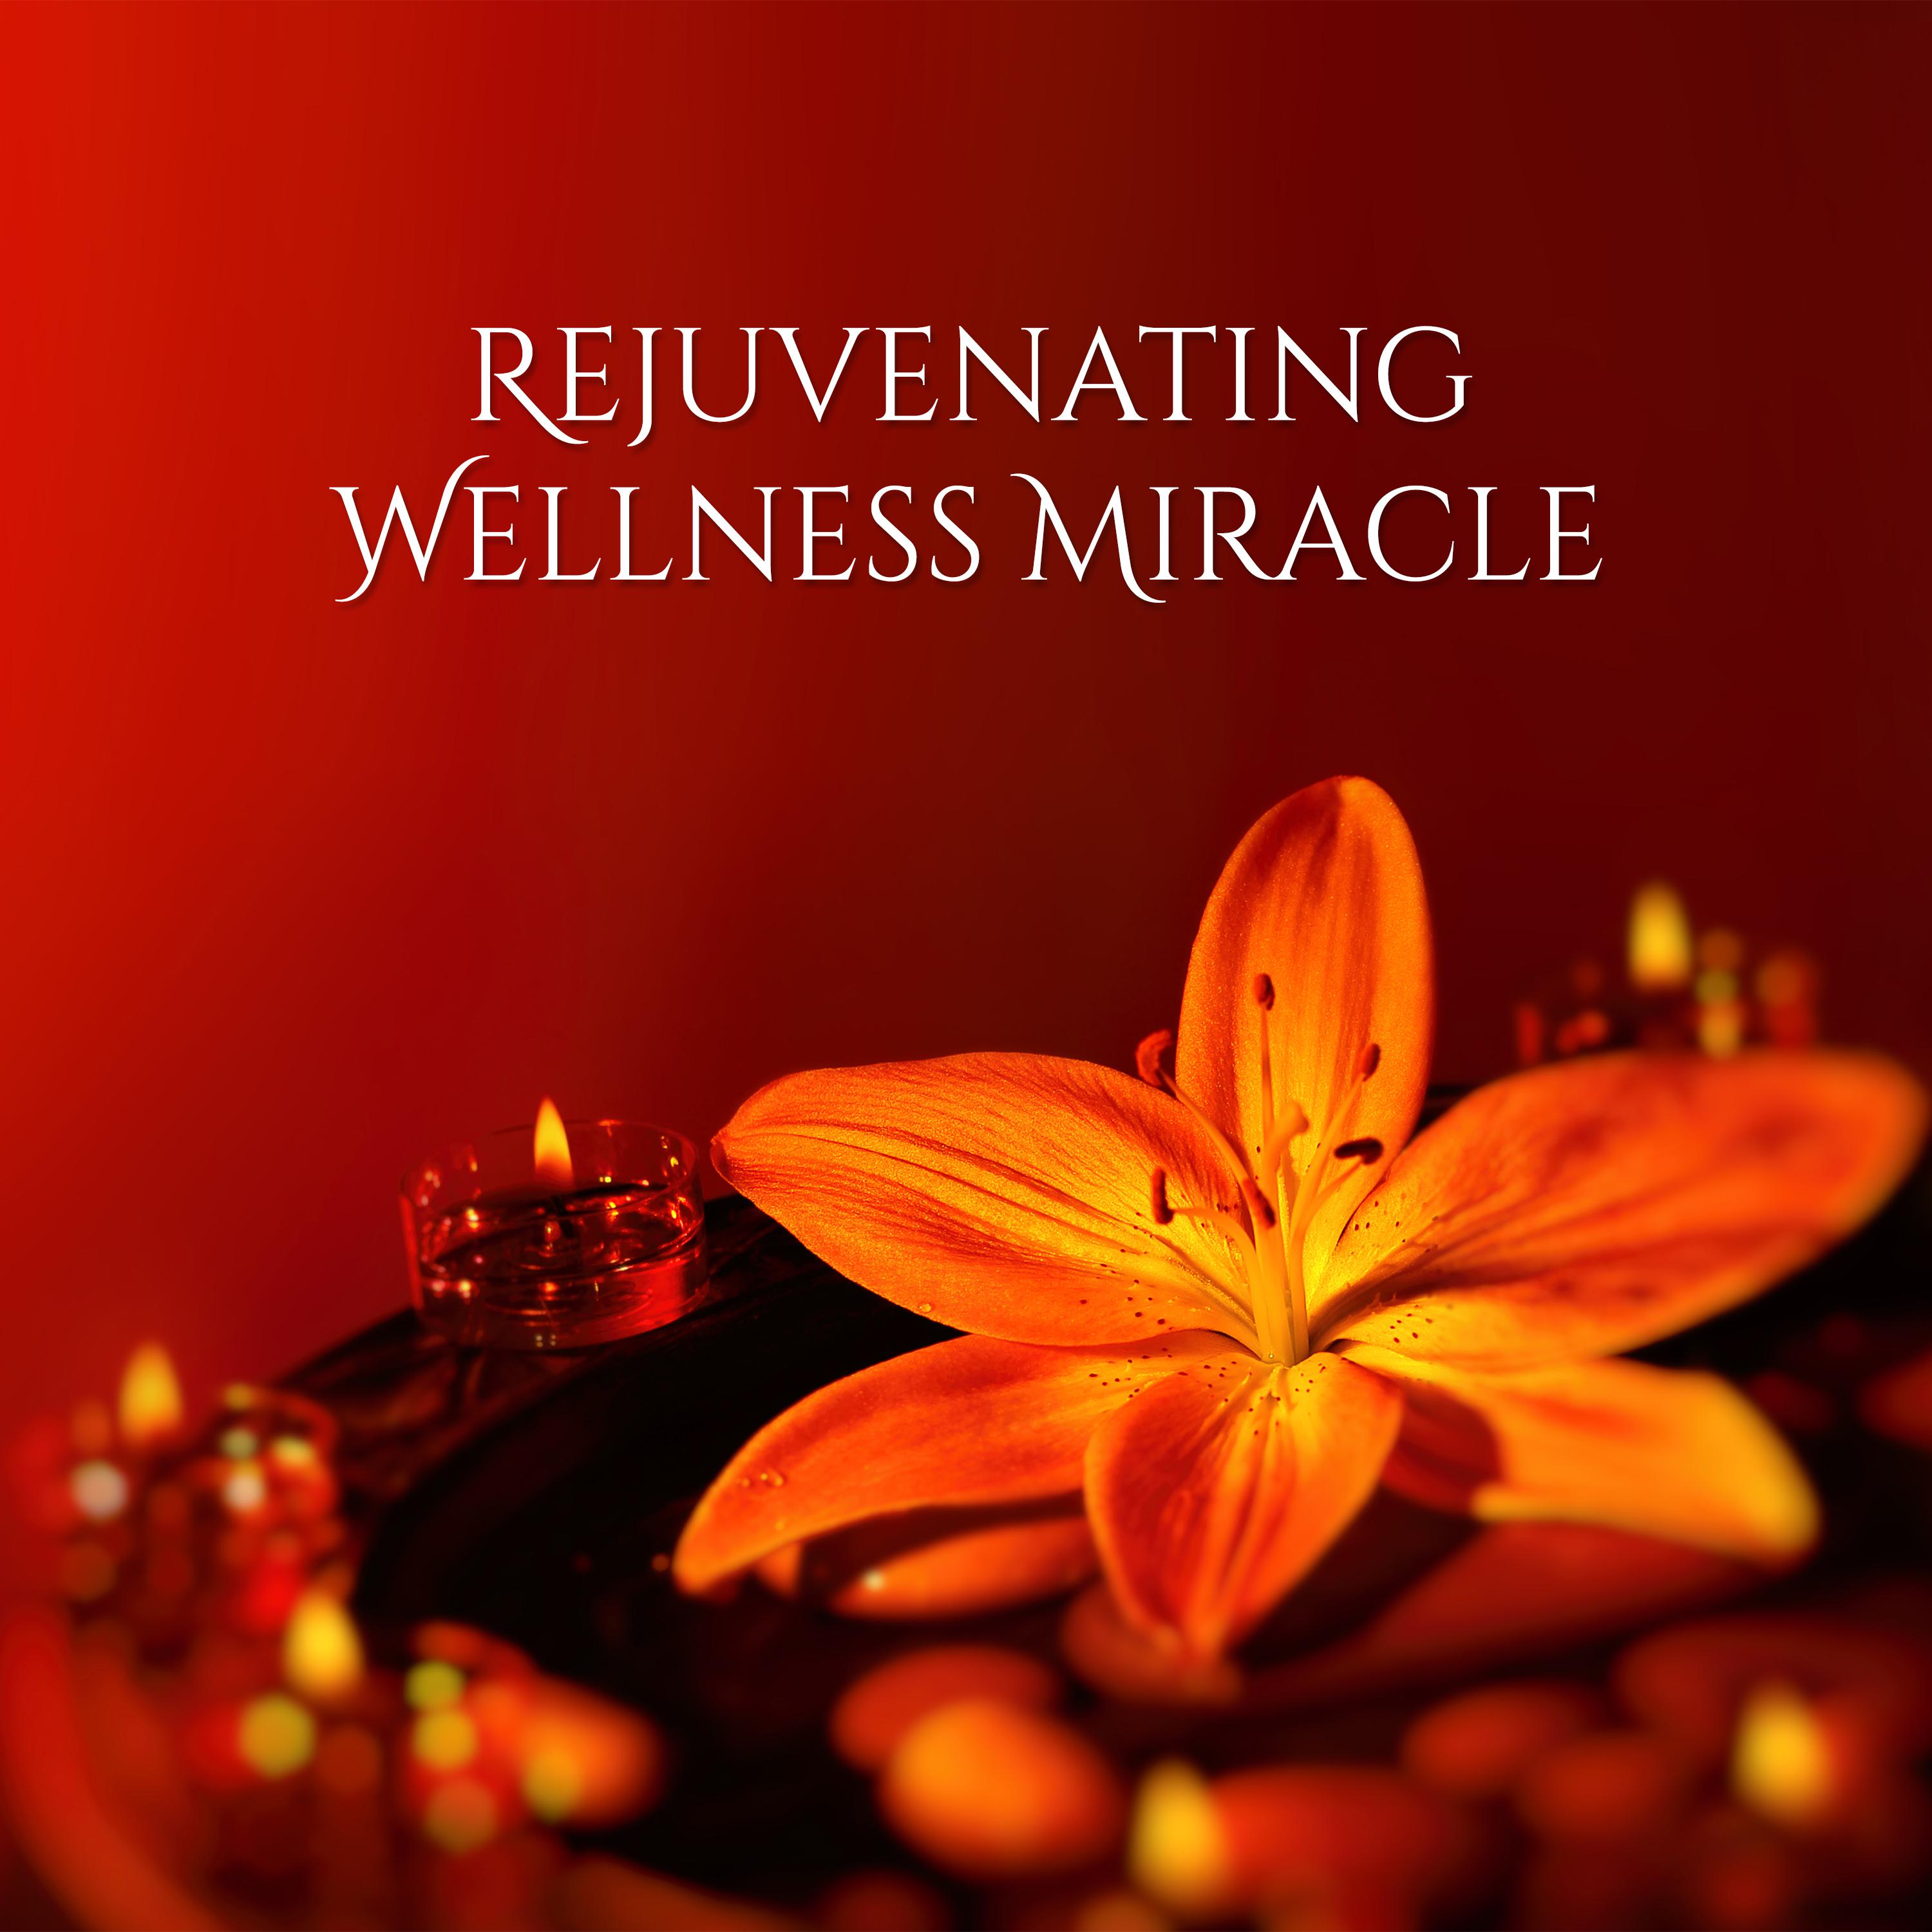 Rejuvenating Wellness Miracle (Health Farm, Endless Spa Pleasure, Warming Therapy, Massage Session, Replenish Vigor)